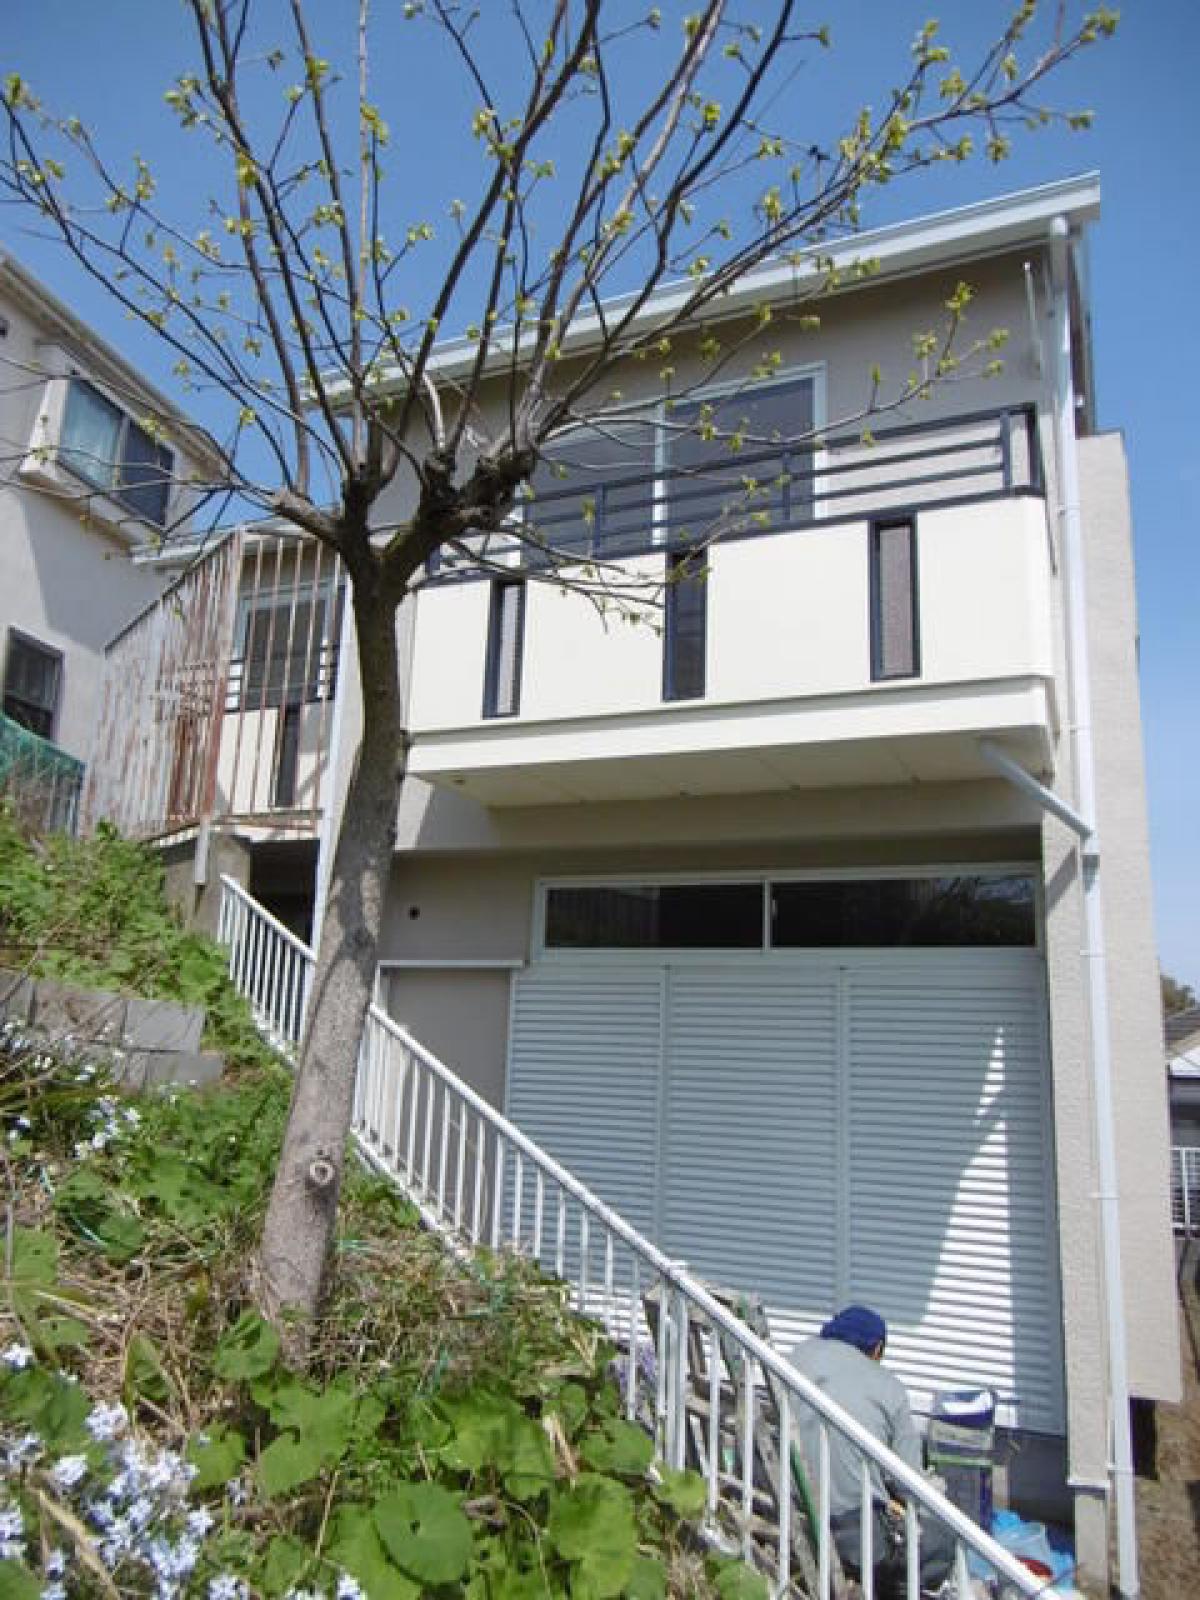 Picture of Home For Sale in Yokohama Shi Tsurumi Ku, Kanagawa, Japan